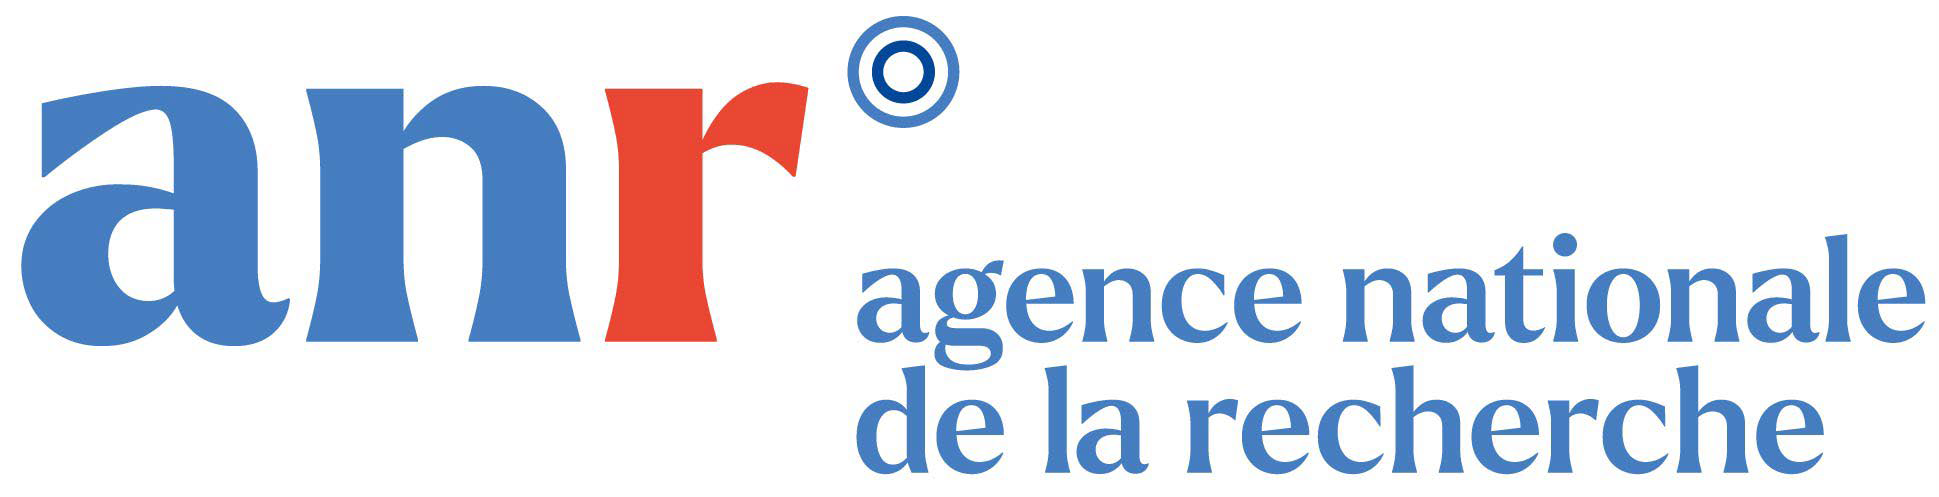 ANR - logo